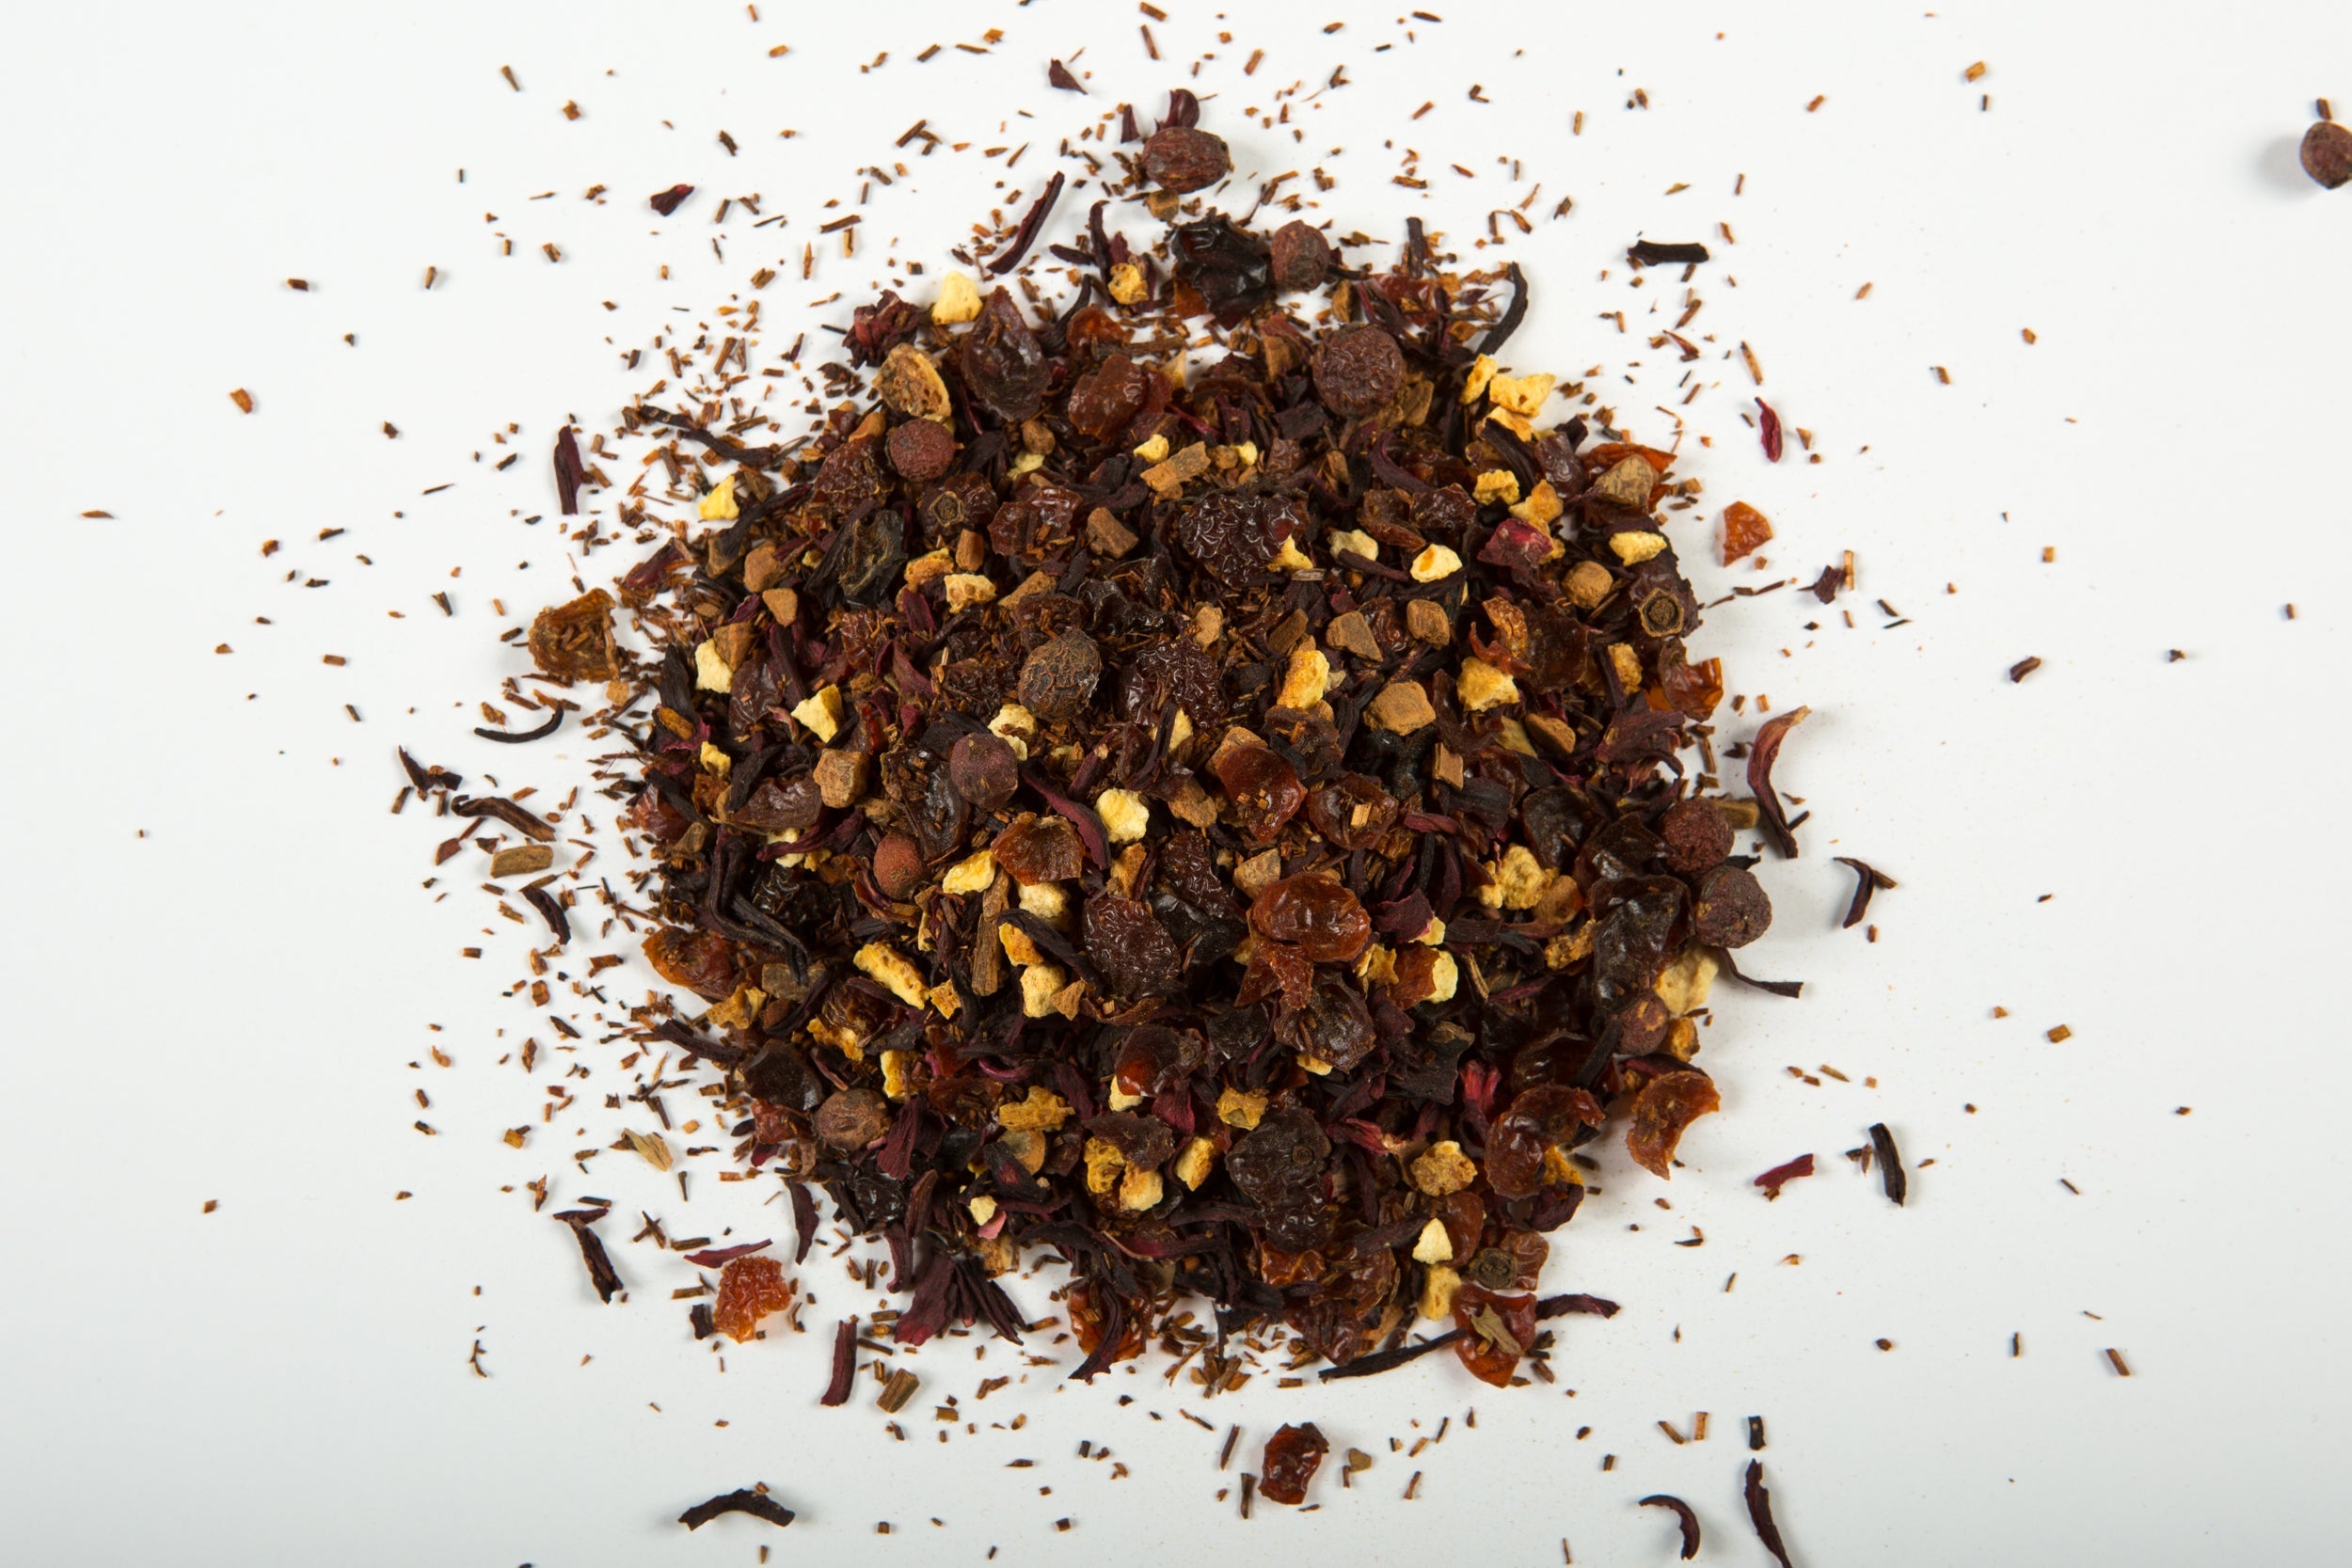 A pile of Find Your Focus loose-leaf tea.